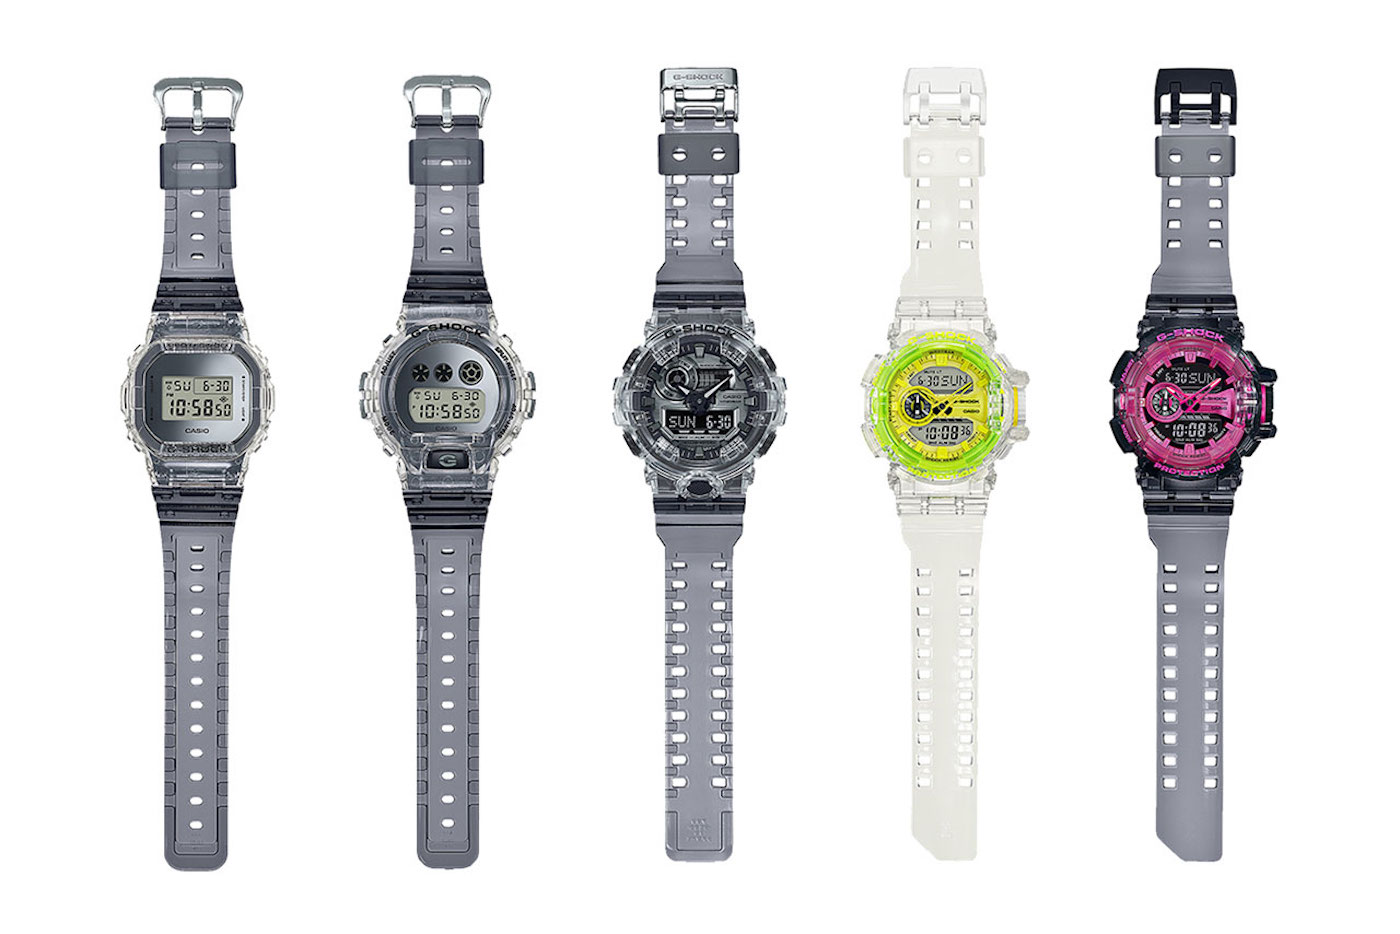 Casio-G-Clear-Skeleton-Series-Watches